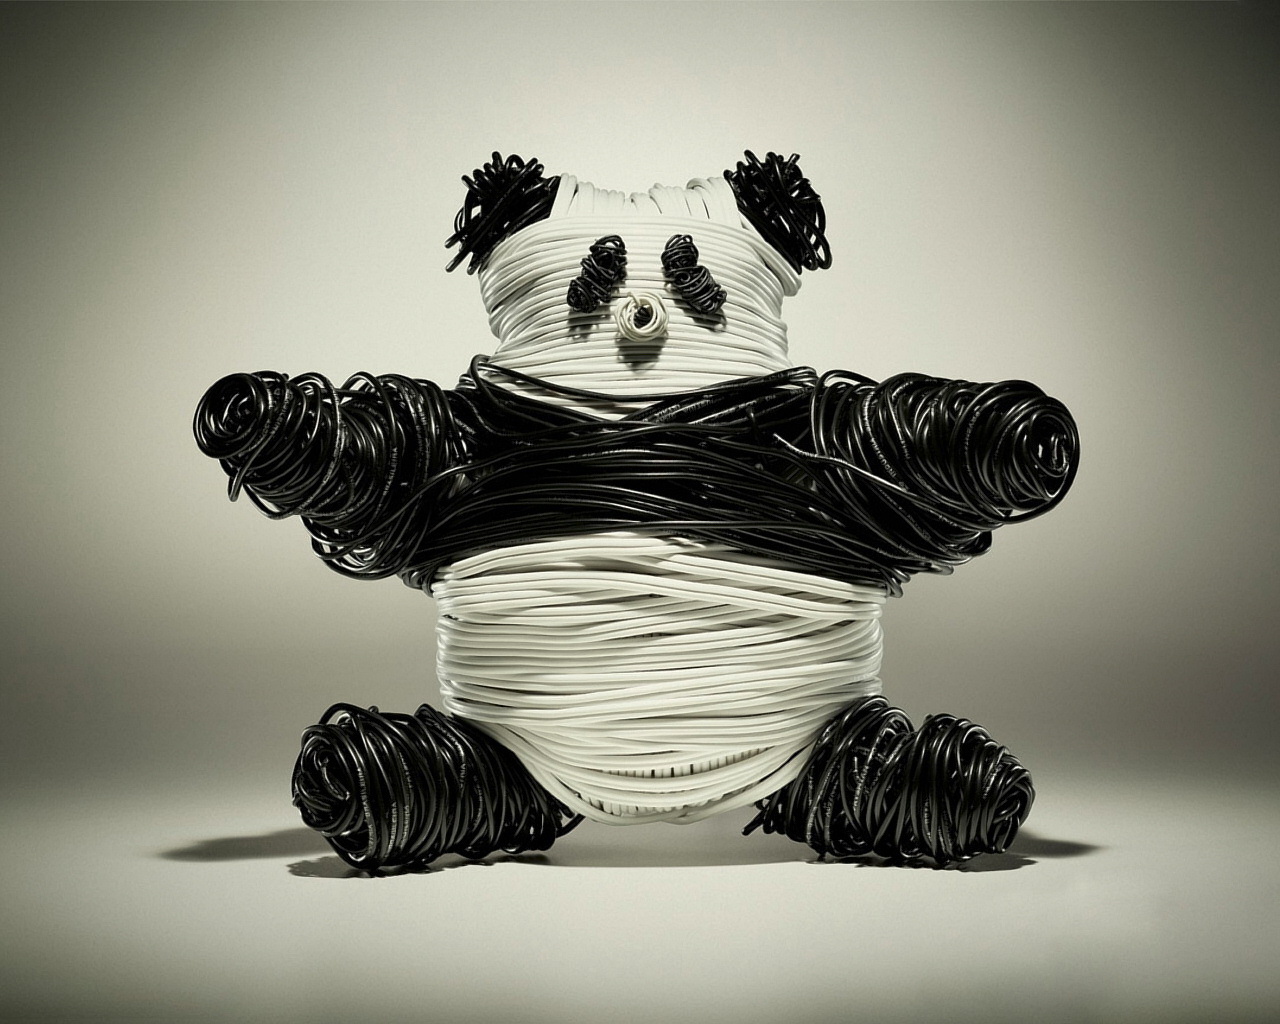 Панда из проволоки, провода, креативно Креативные с приколом картинки, обои рабочий стол